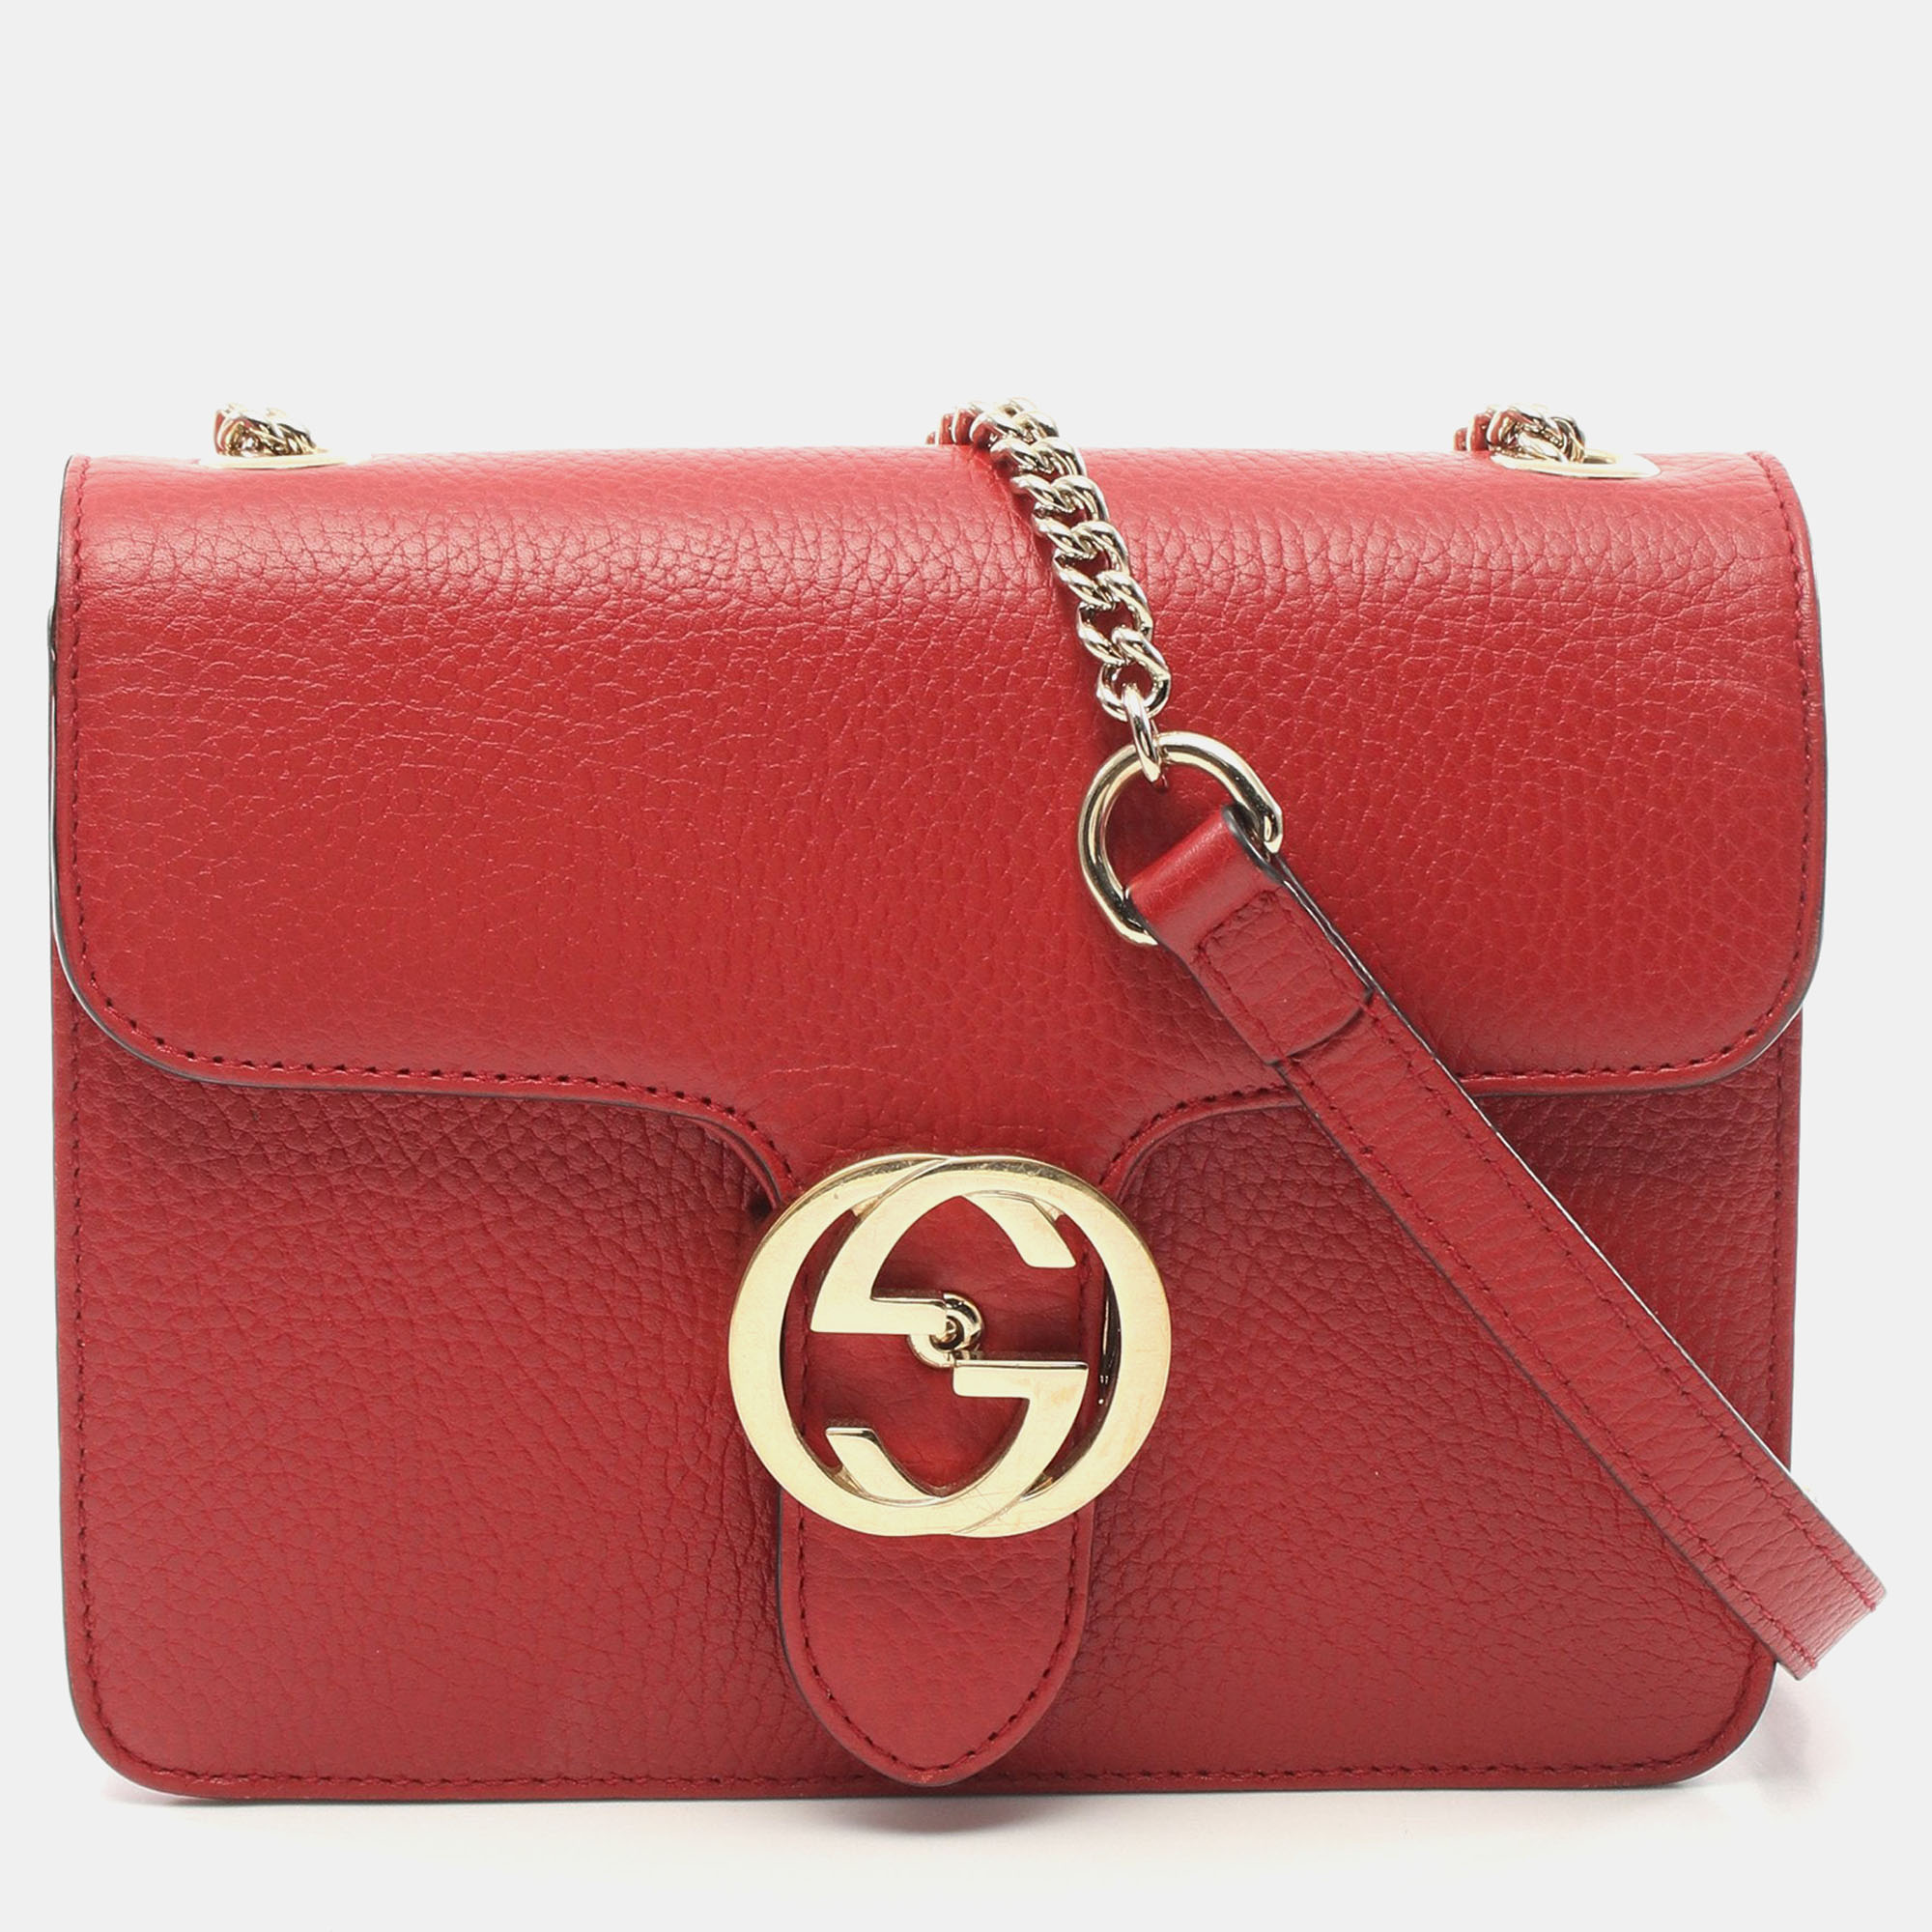 Gucci interlocking g chain shoulder bag leather red